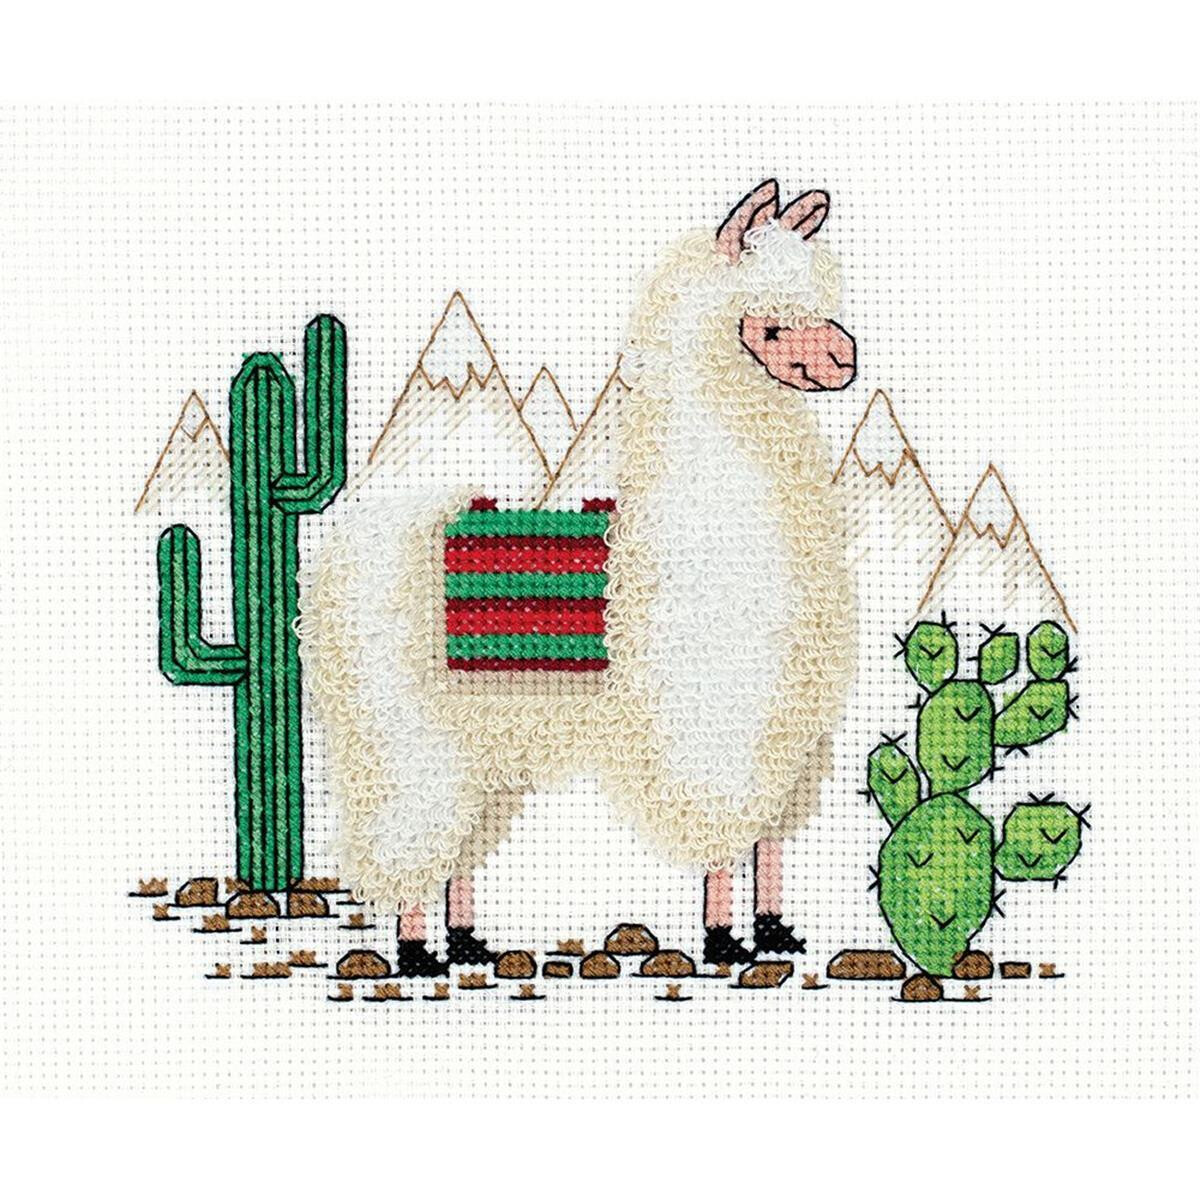 Cute llama necklace Llama llama love Llama jewelry Cross stitch pendant Mini embroidery llama gift Hand embroidery jewelry